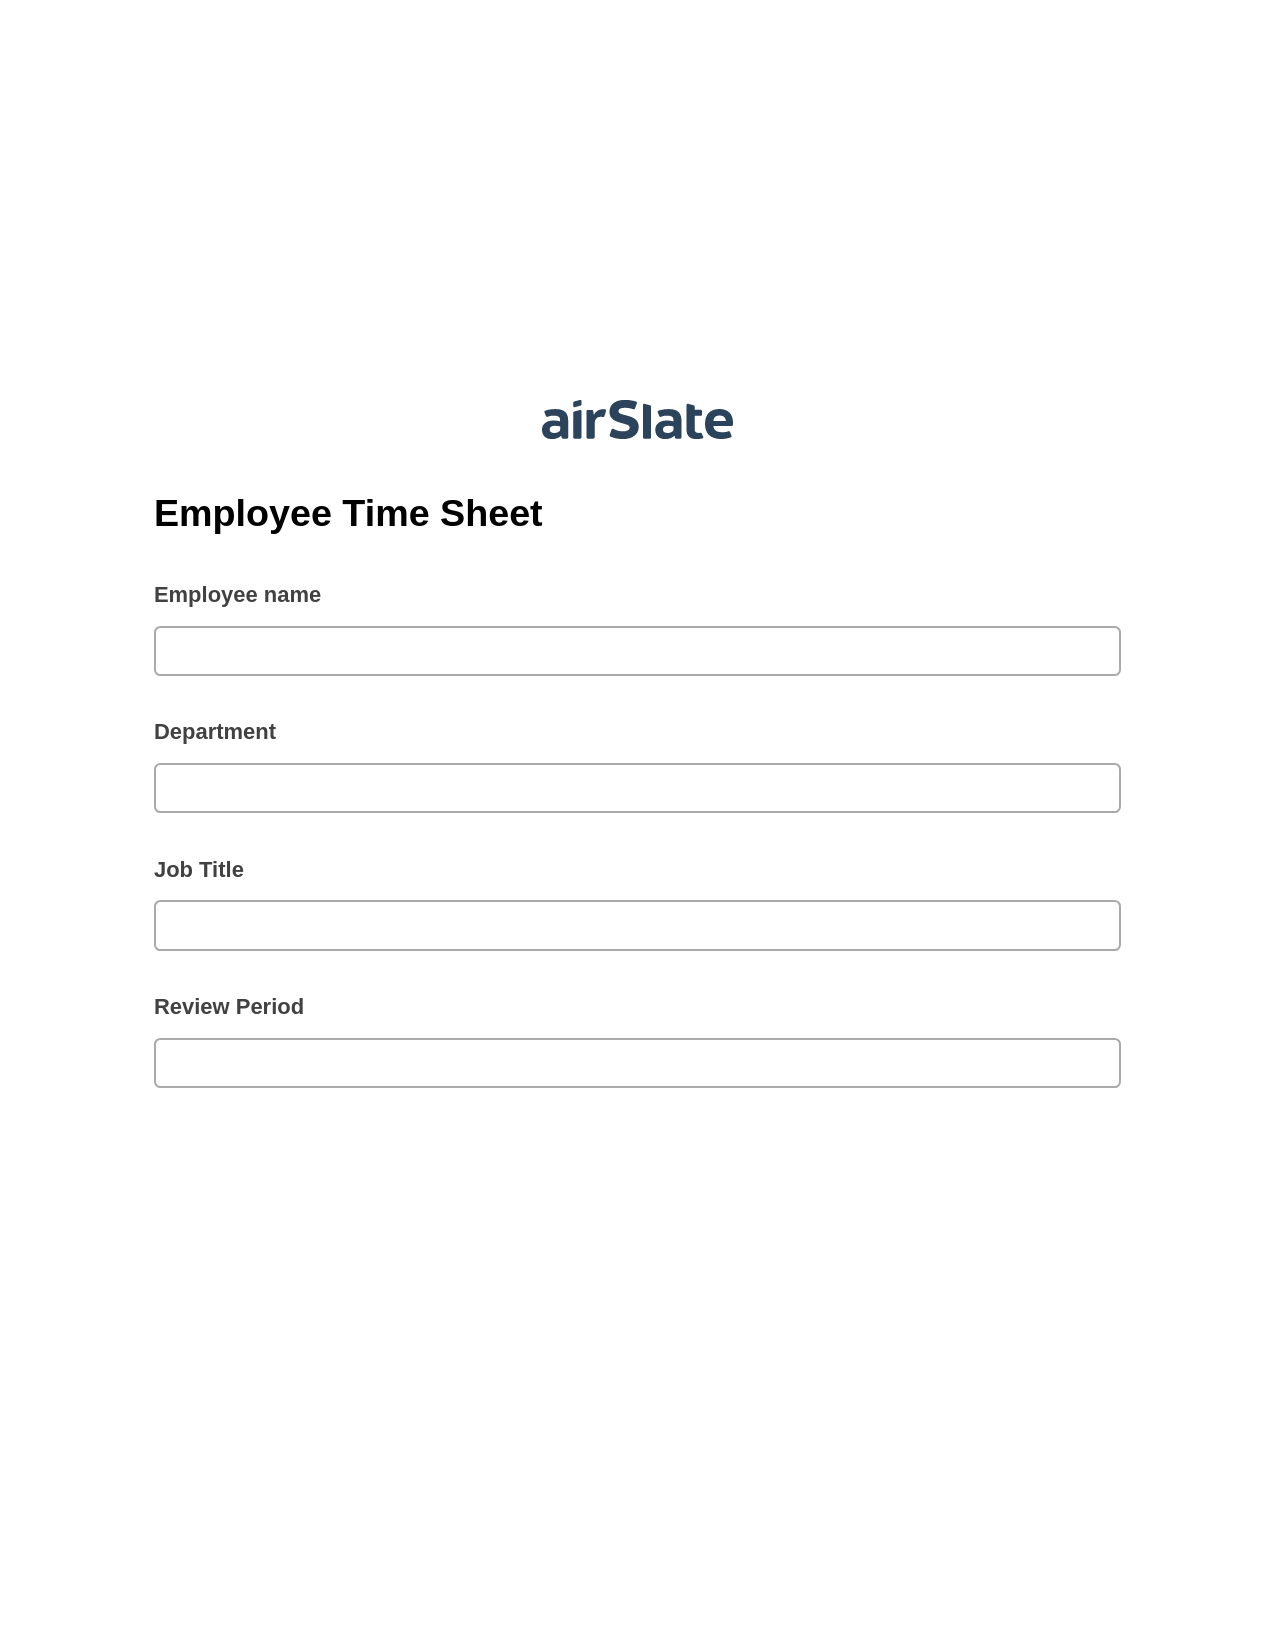 Employee Time Sheet Pre-fill Document Bot, Jira Bot, Archive to OneDrive Bot